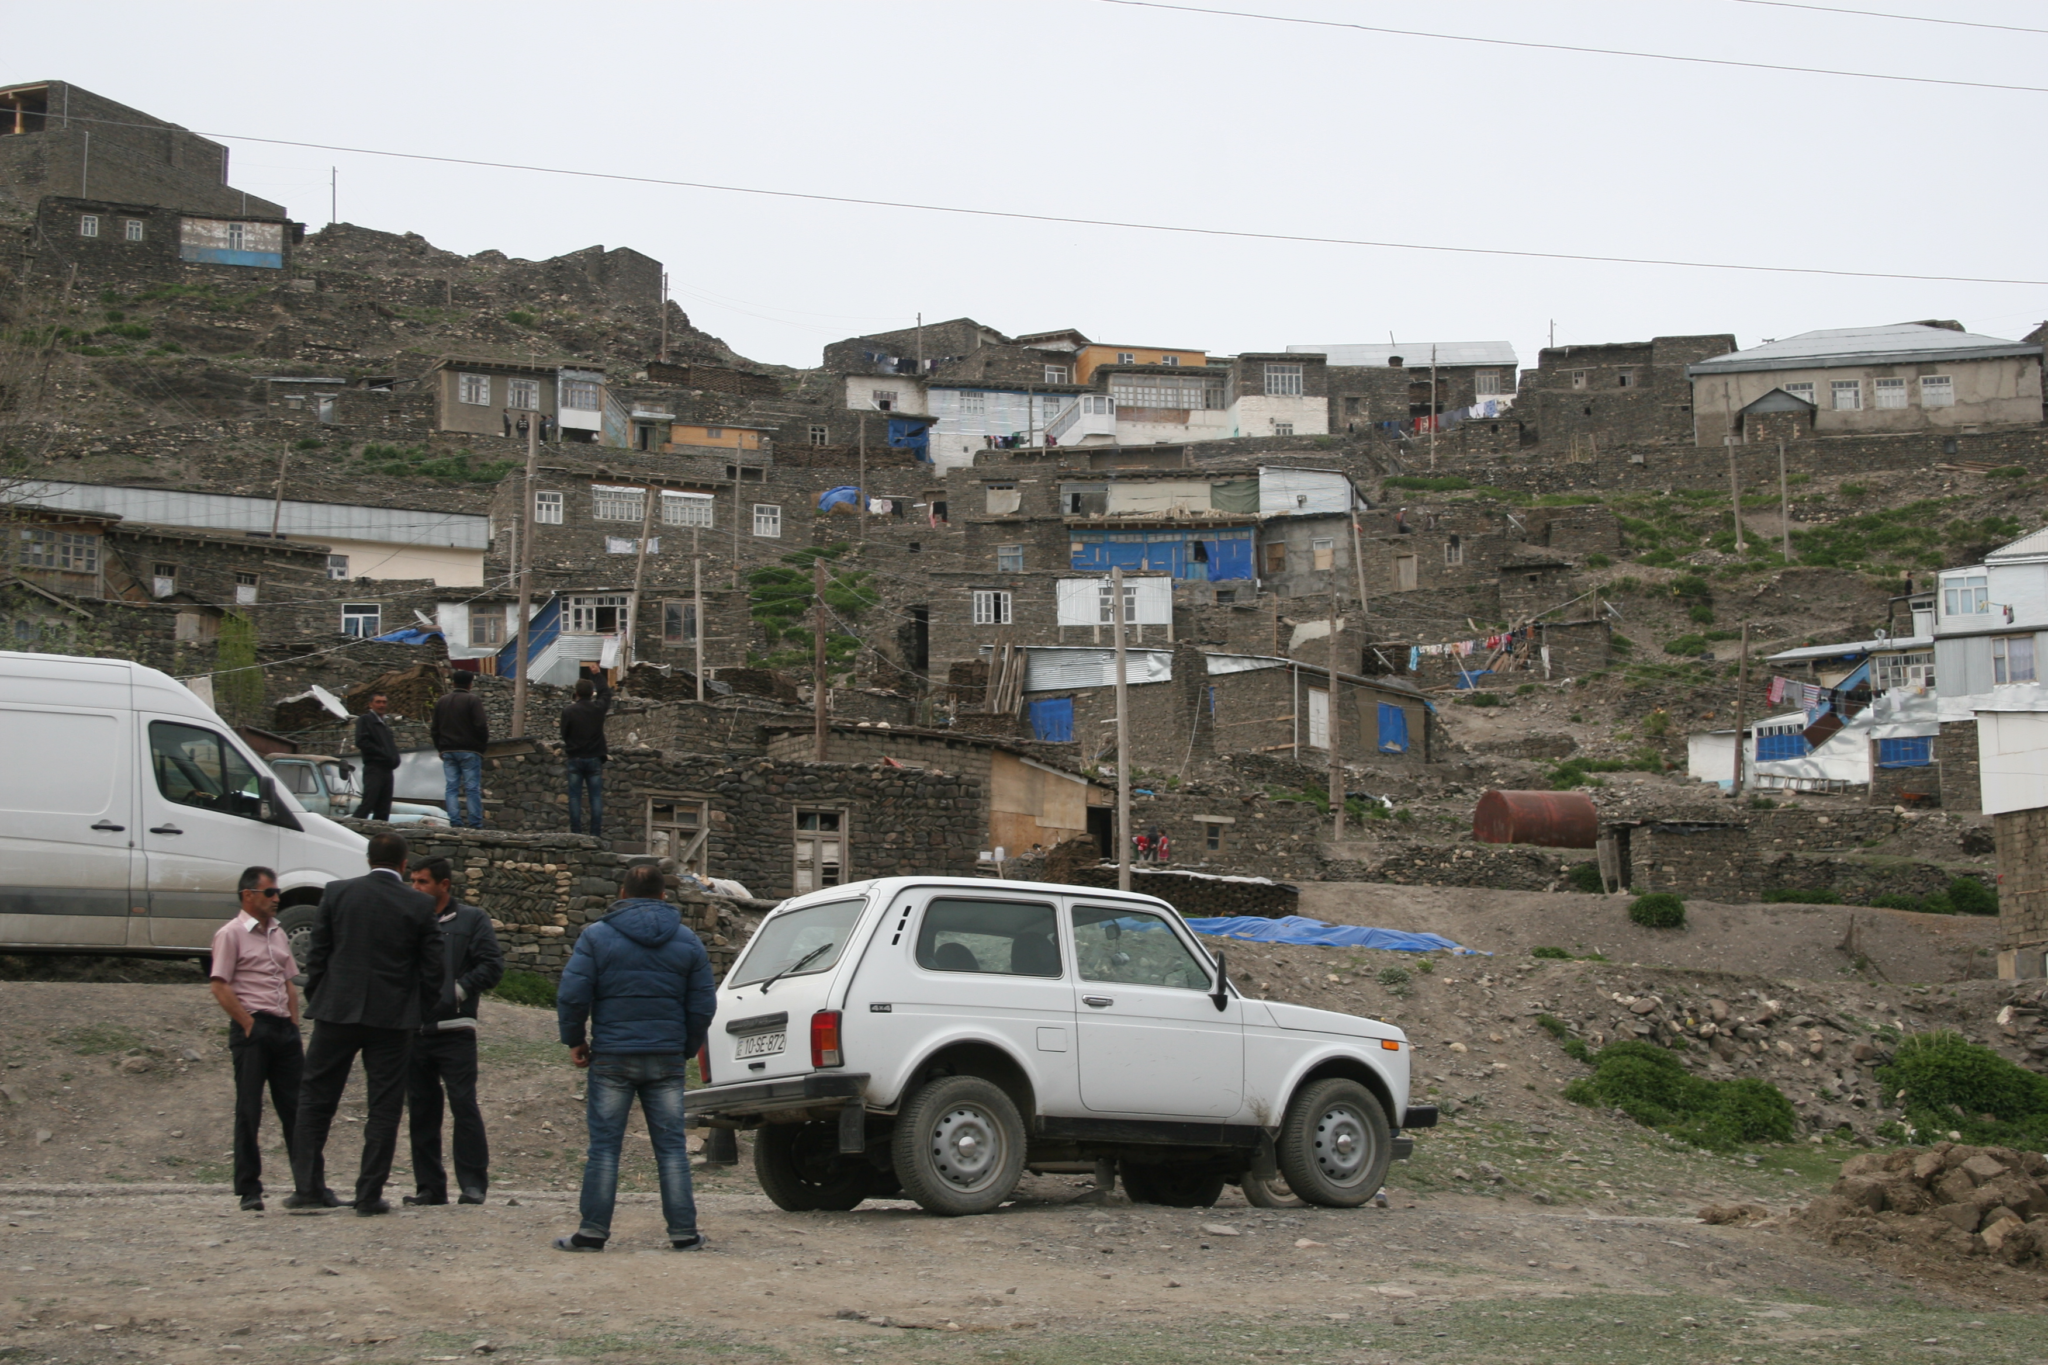 The Khinalig village in Azerbaijan